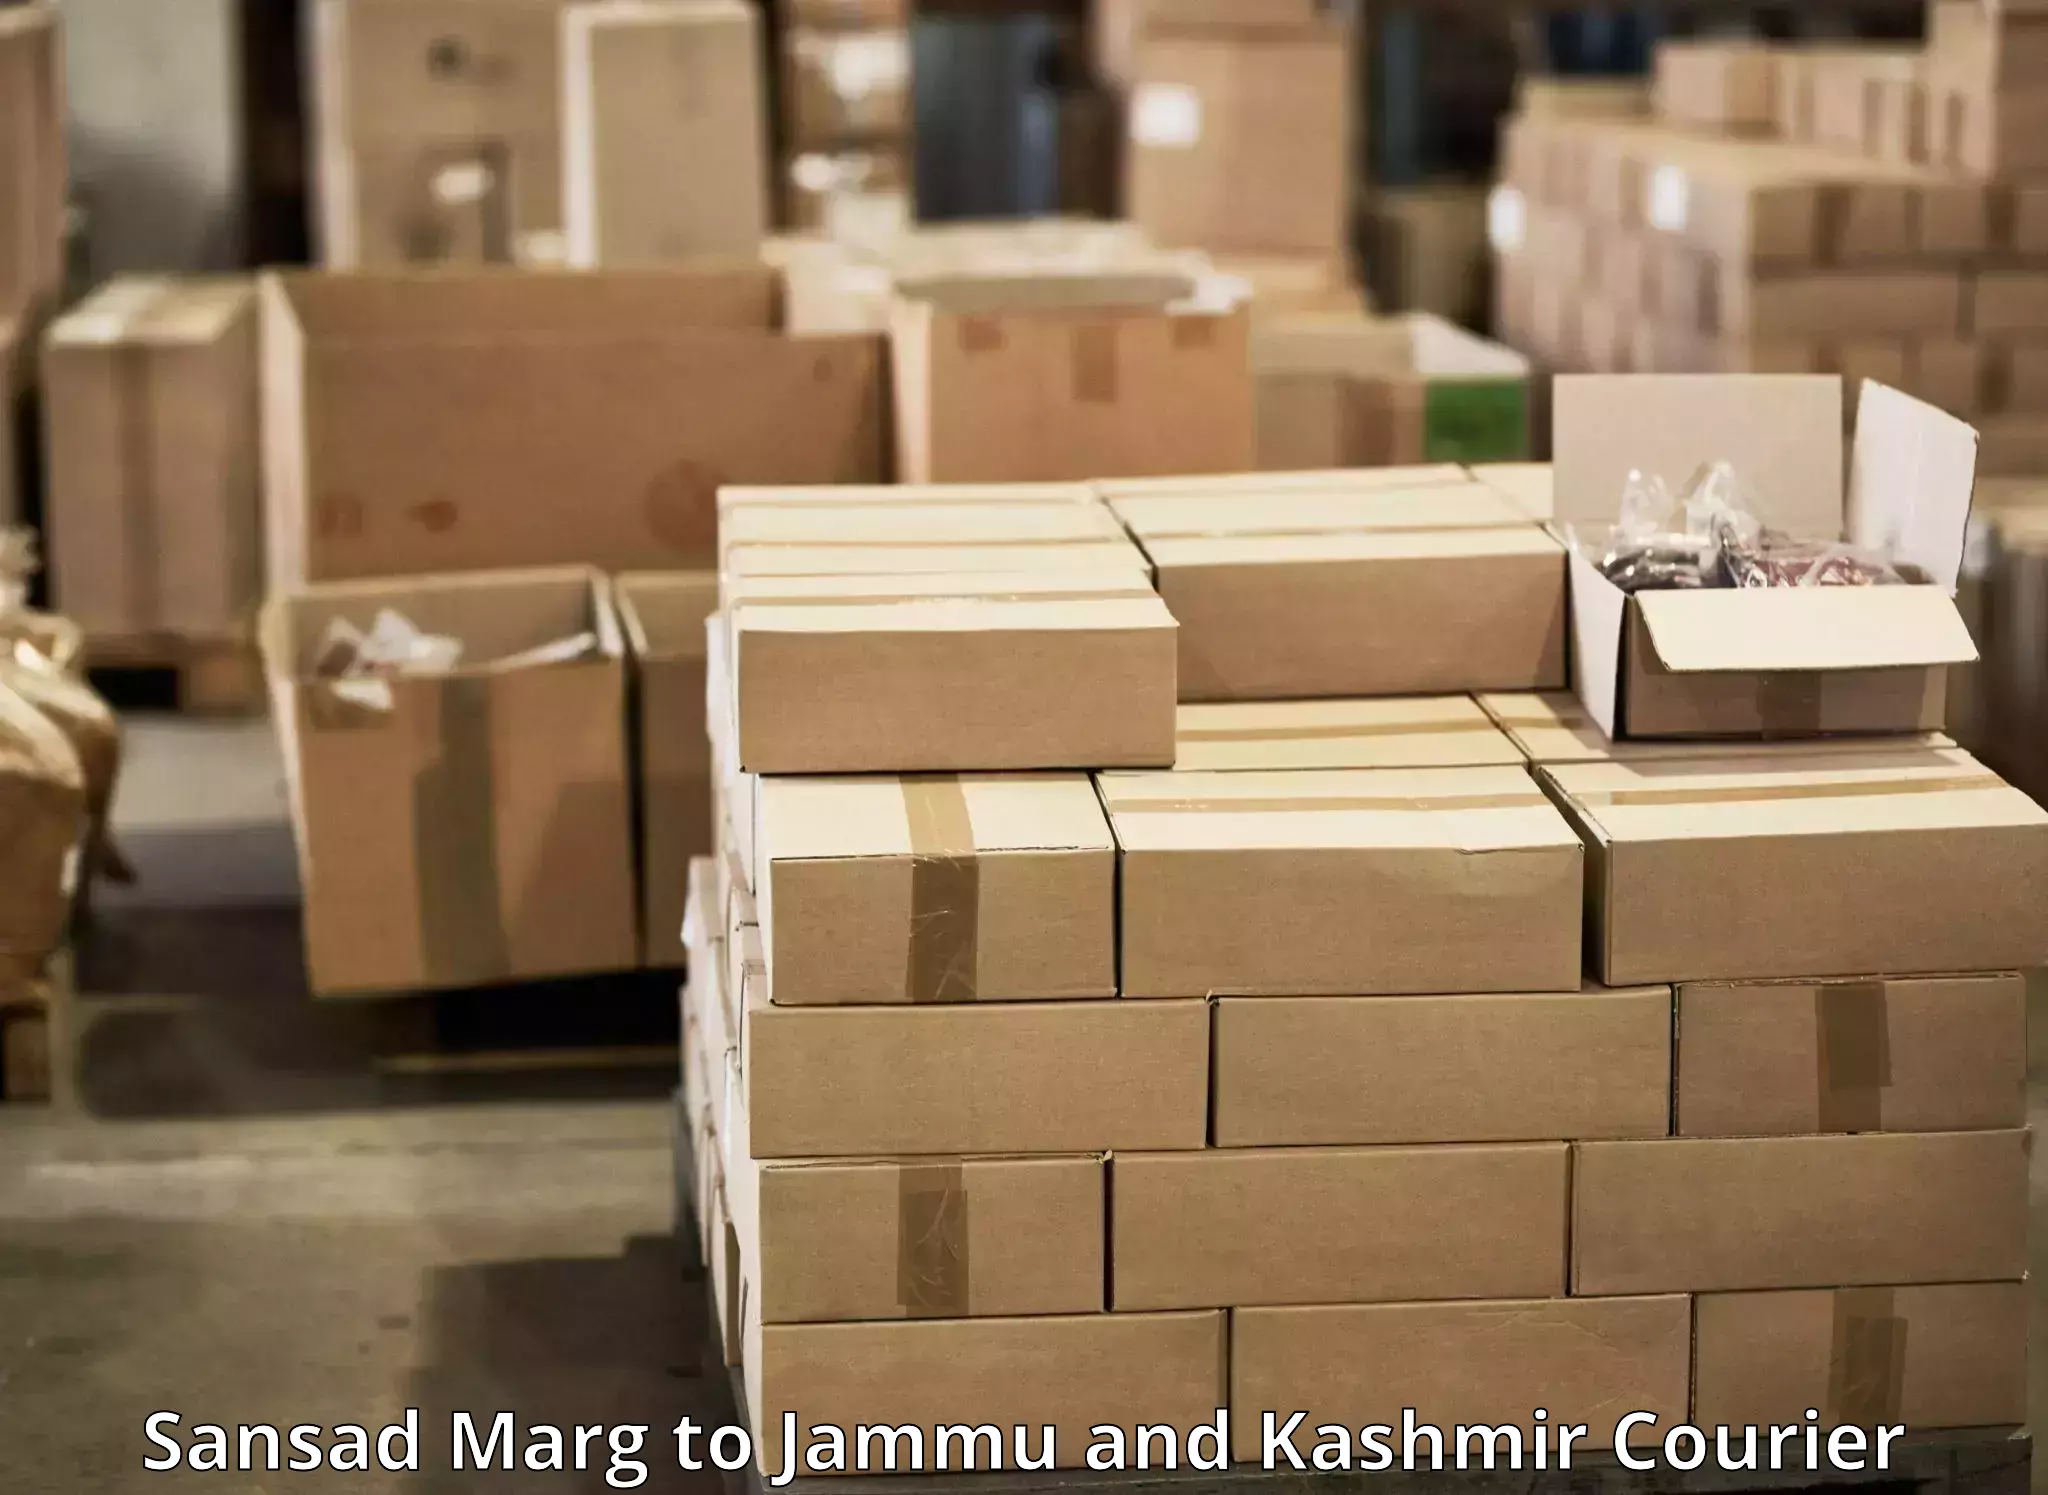 Courier service partnerships in Sansad Marg to Jakh